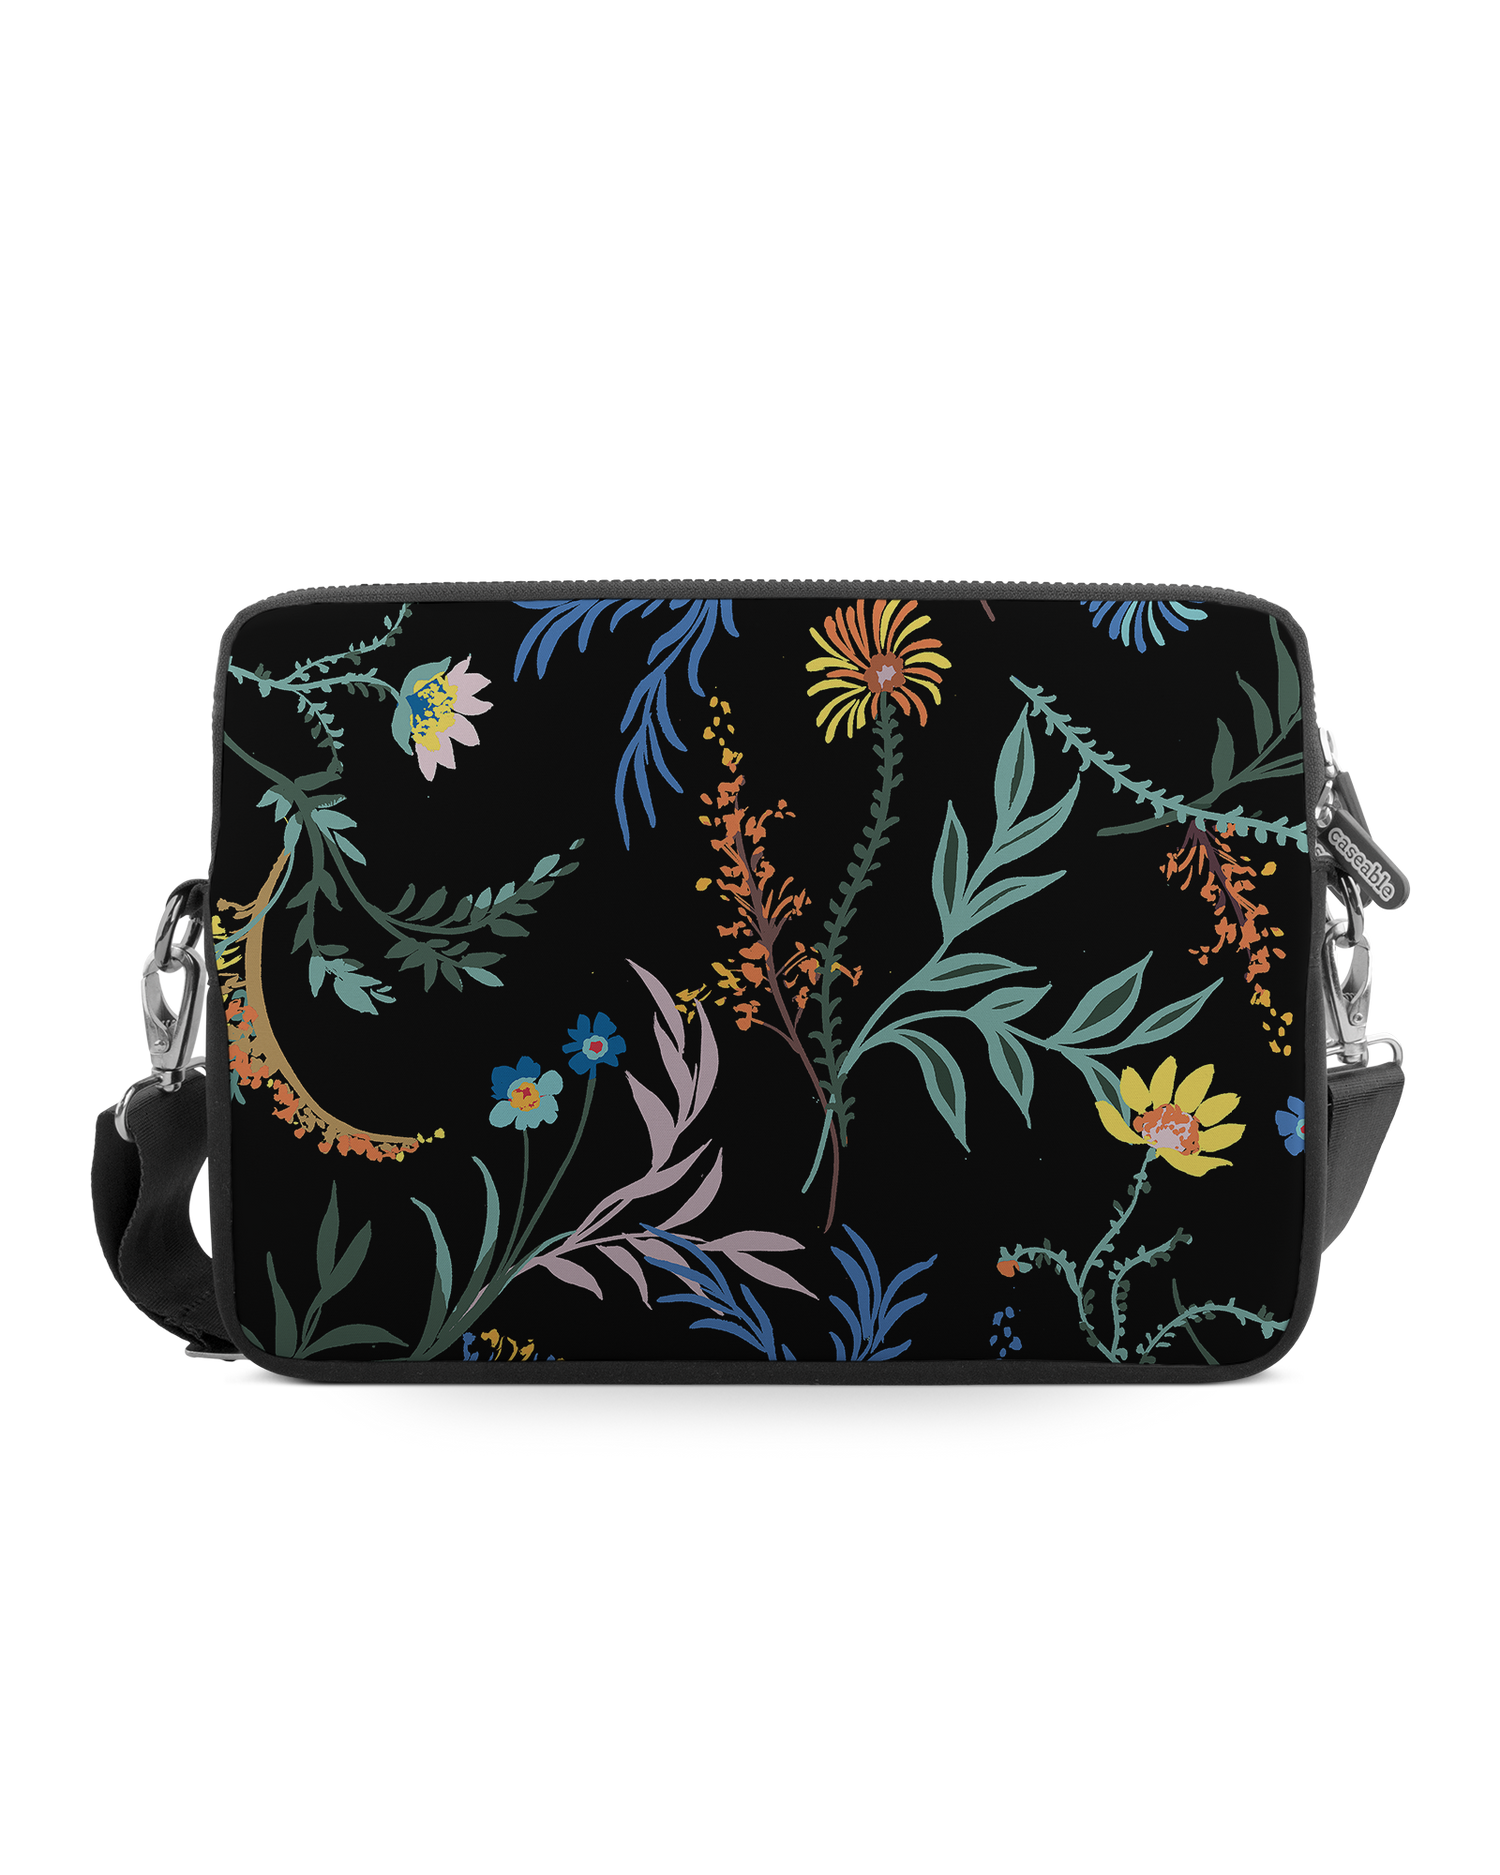 Woodland Spring Floral Premium Laptop Bag 13-14 inch: Front View